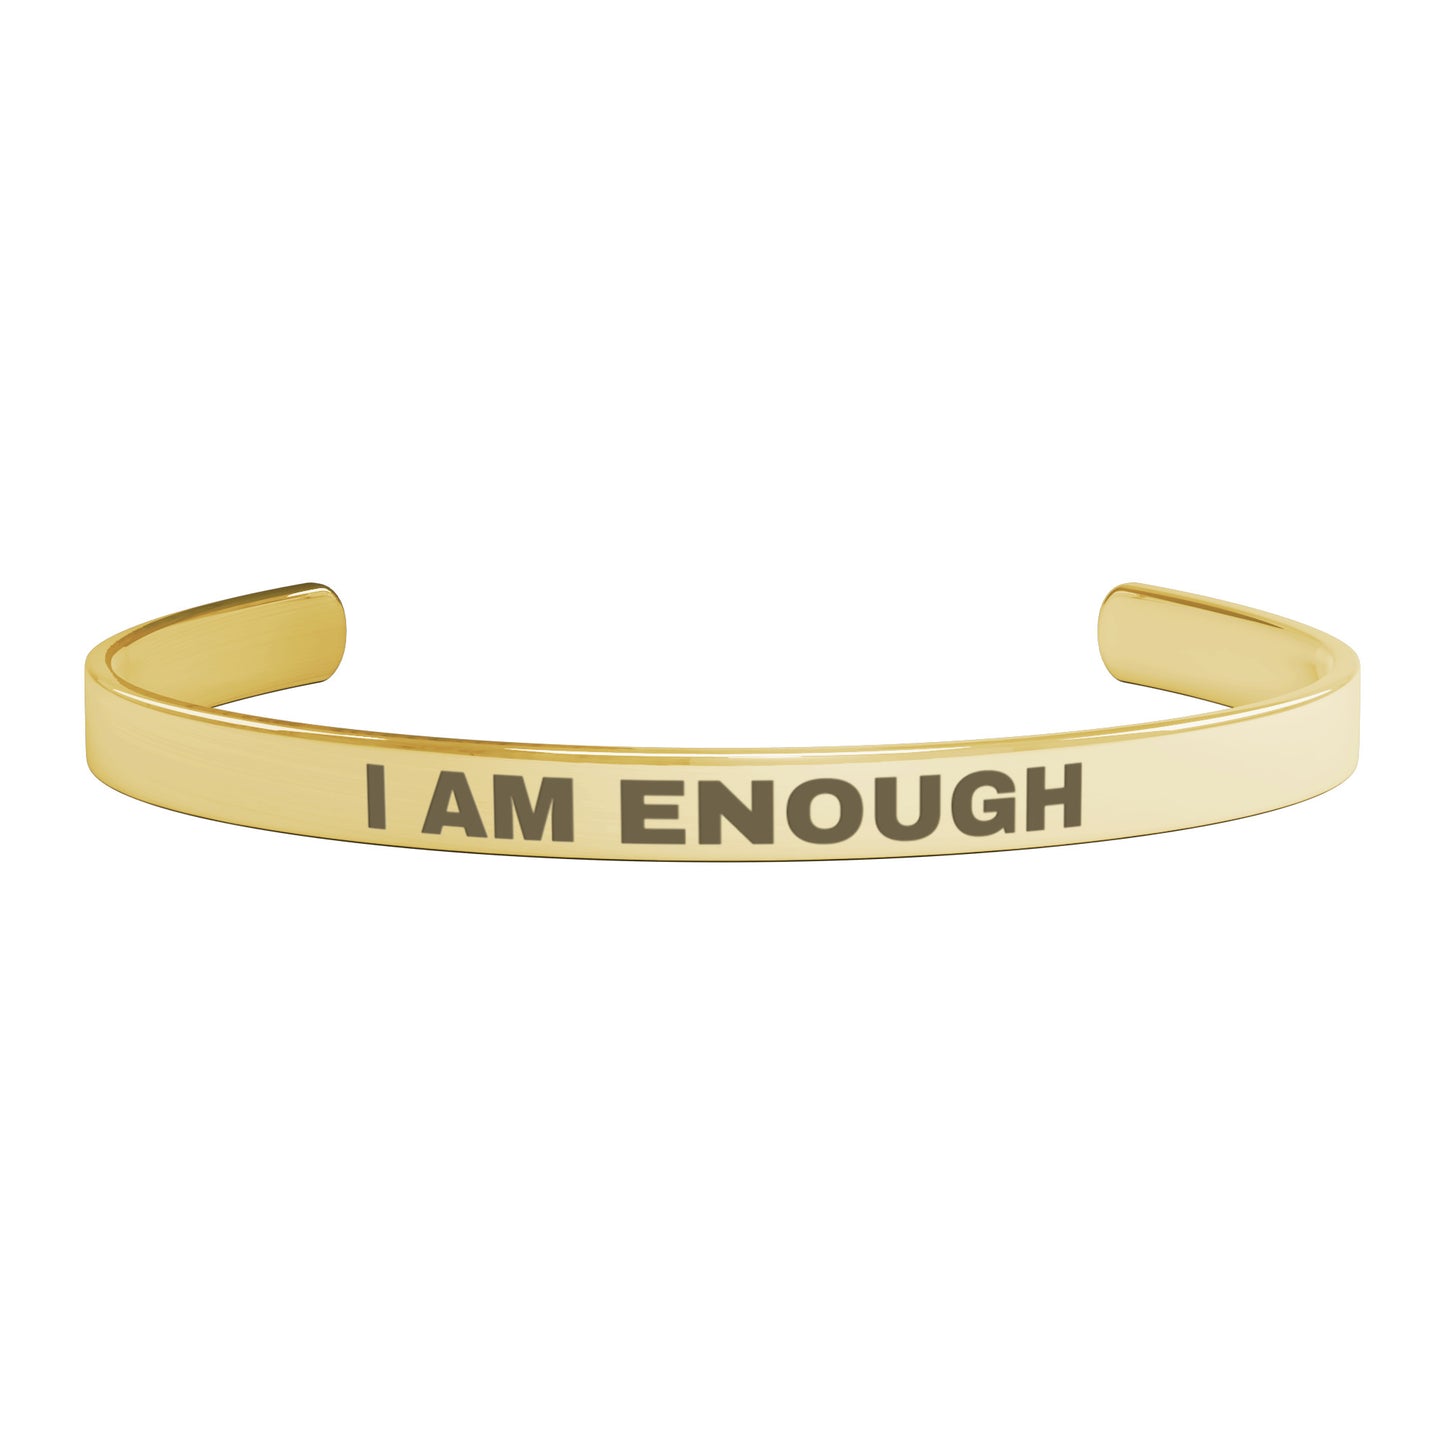 I AM ENOUGH | CUFF BRACELET